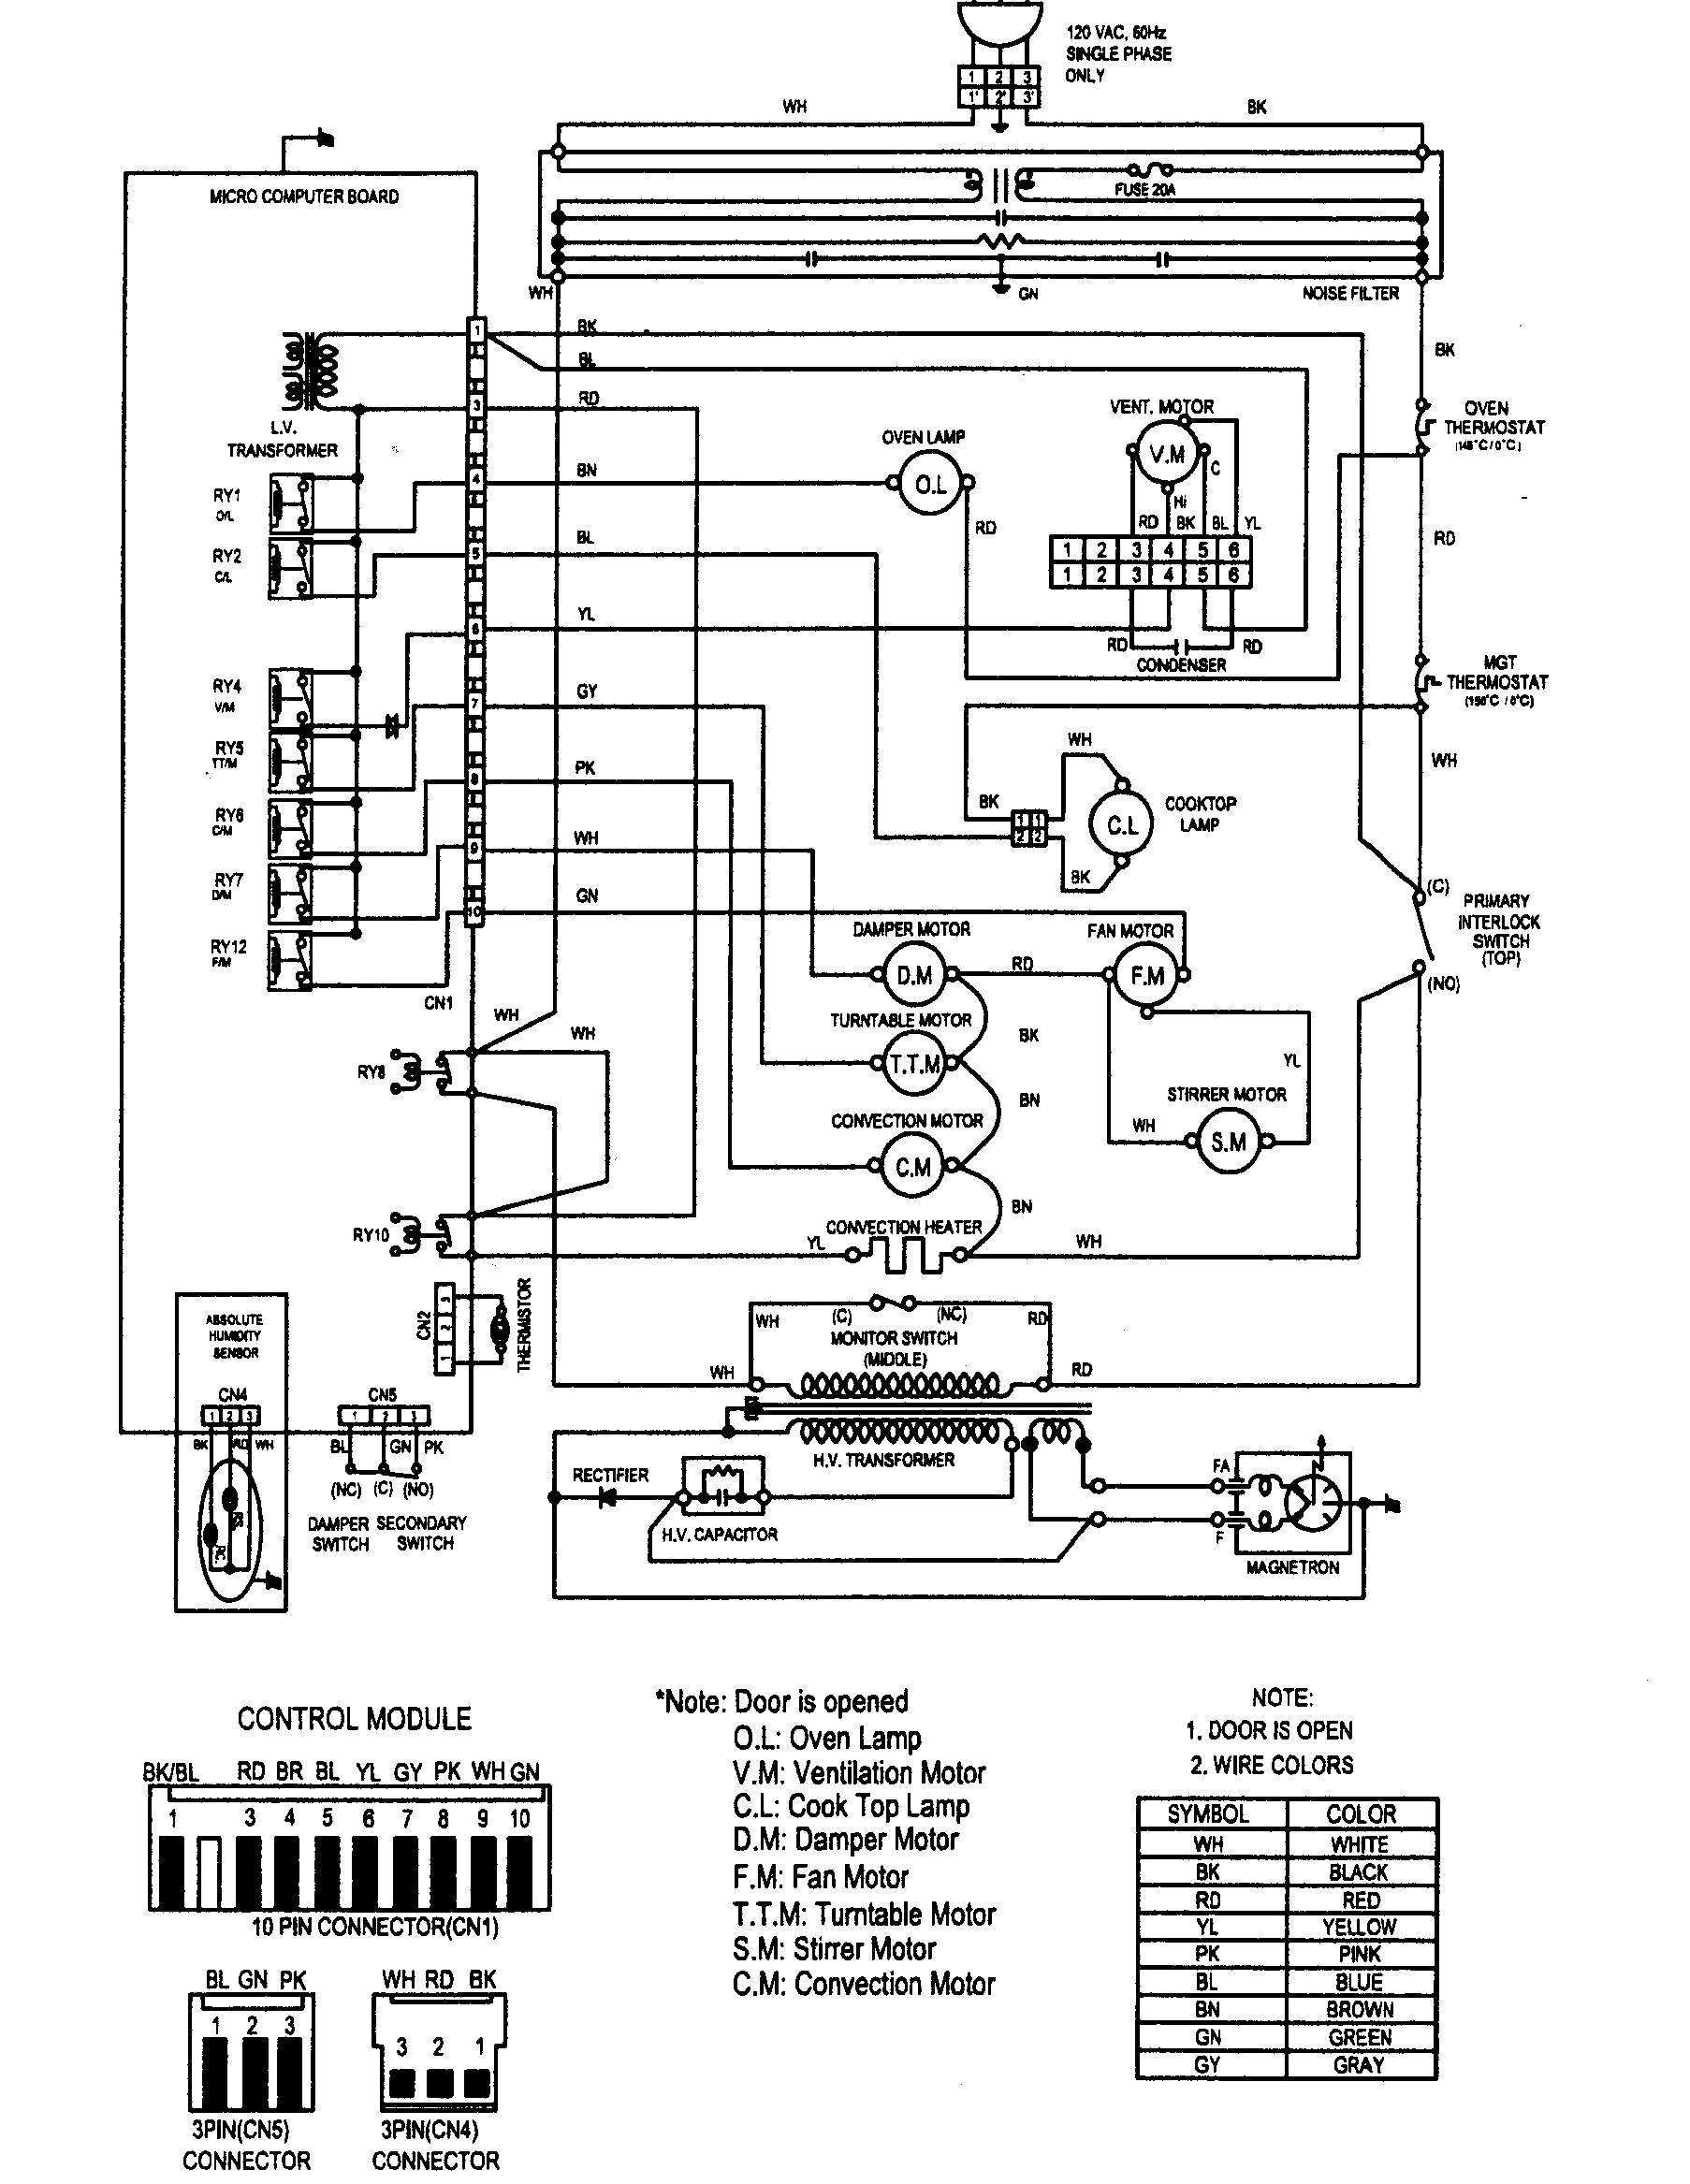 Wiring Diagram For Kenmore Elite Refrigerator Copy Best